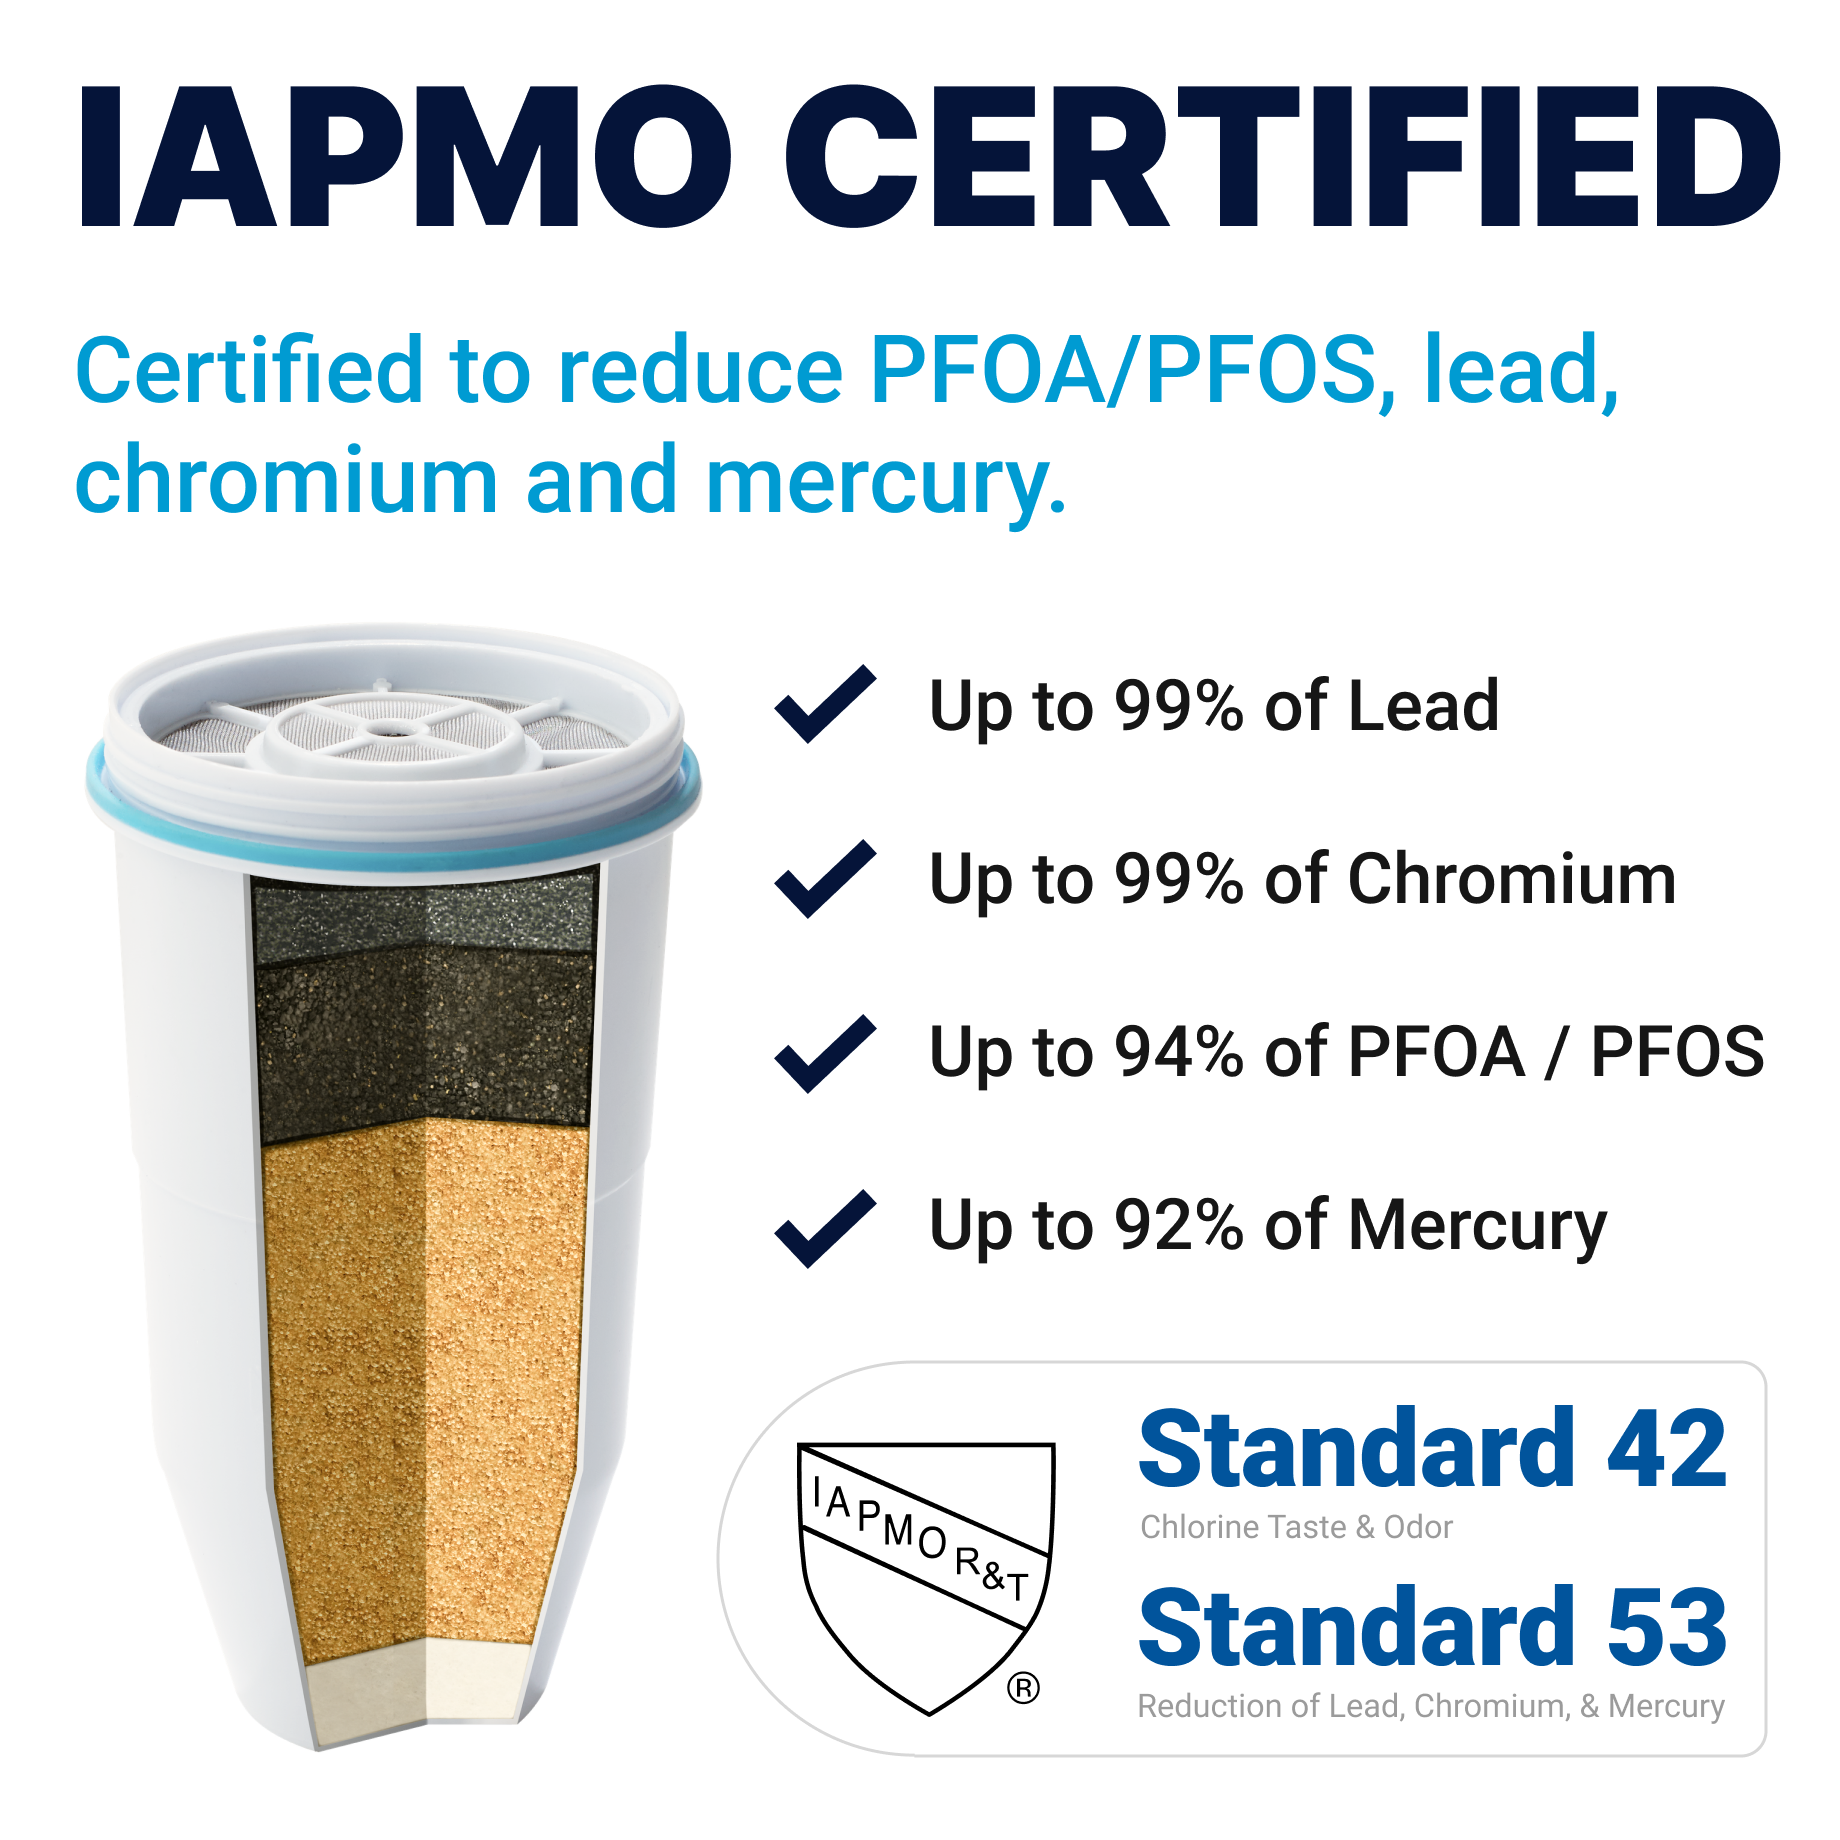 iapmo certified to reduce pfoa/pfos, lead, chromium and mercury